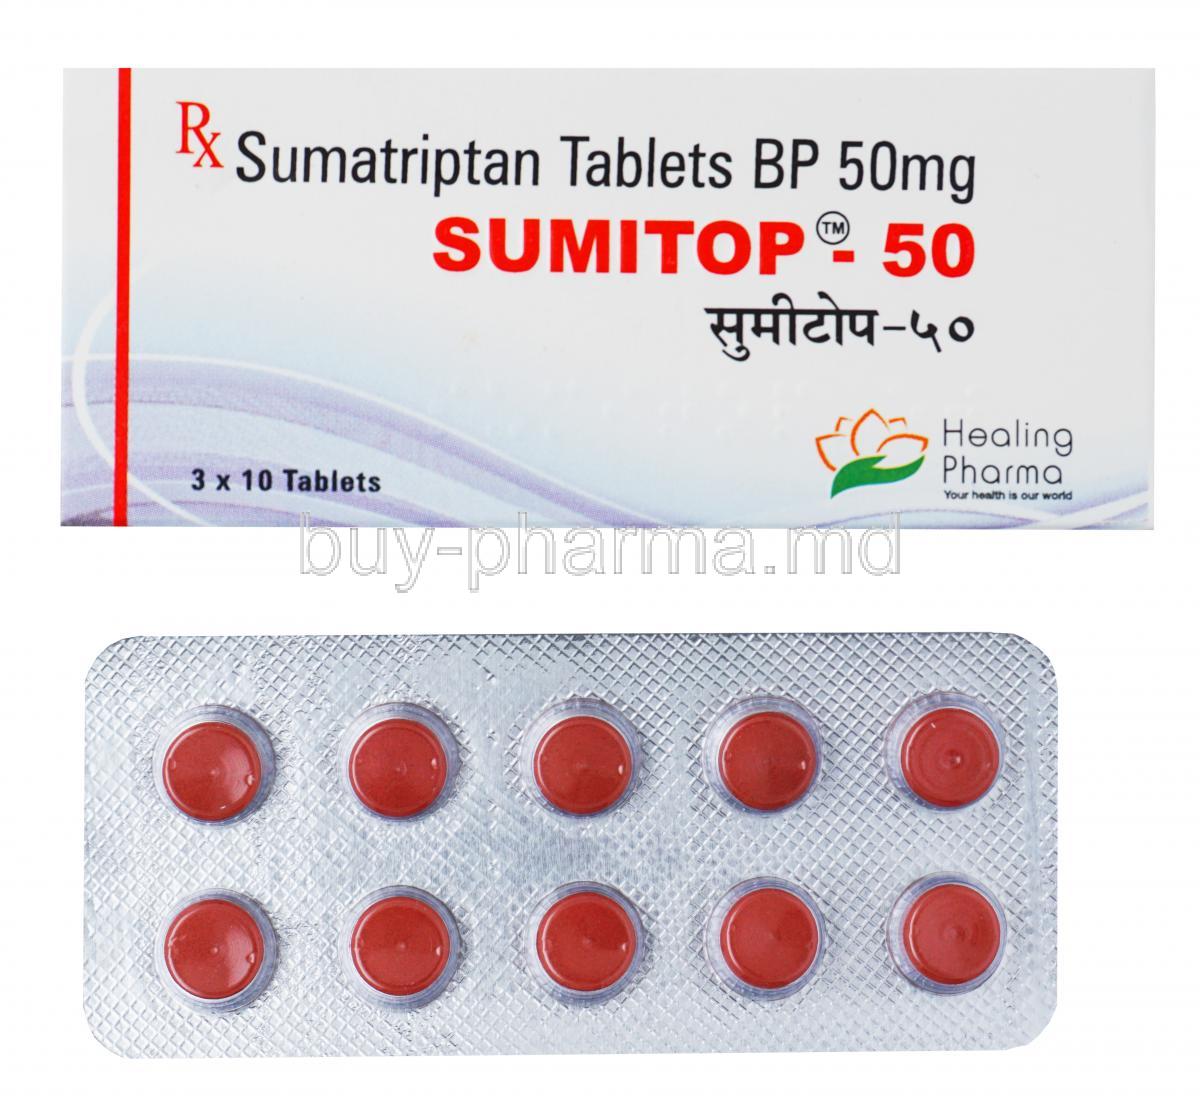 Sumitop, Sumatriptan tablets, 3 x 10 tablets, Healing Pharma, box and blister pack presentation